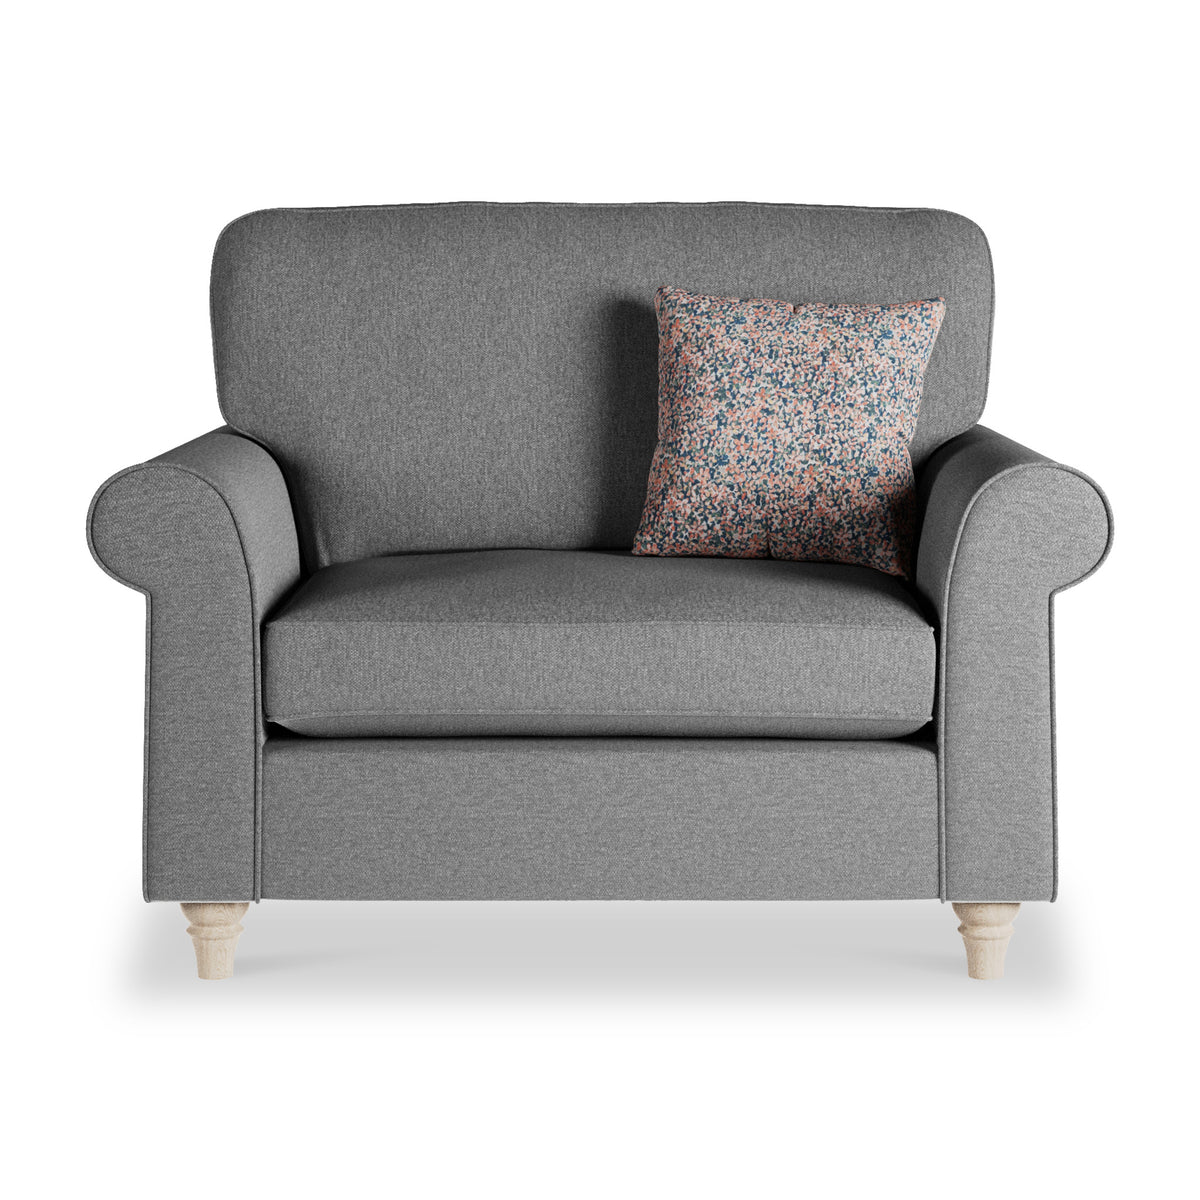 Thomas Grey Snuggle Living Room Chair